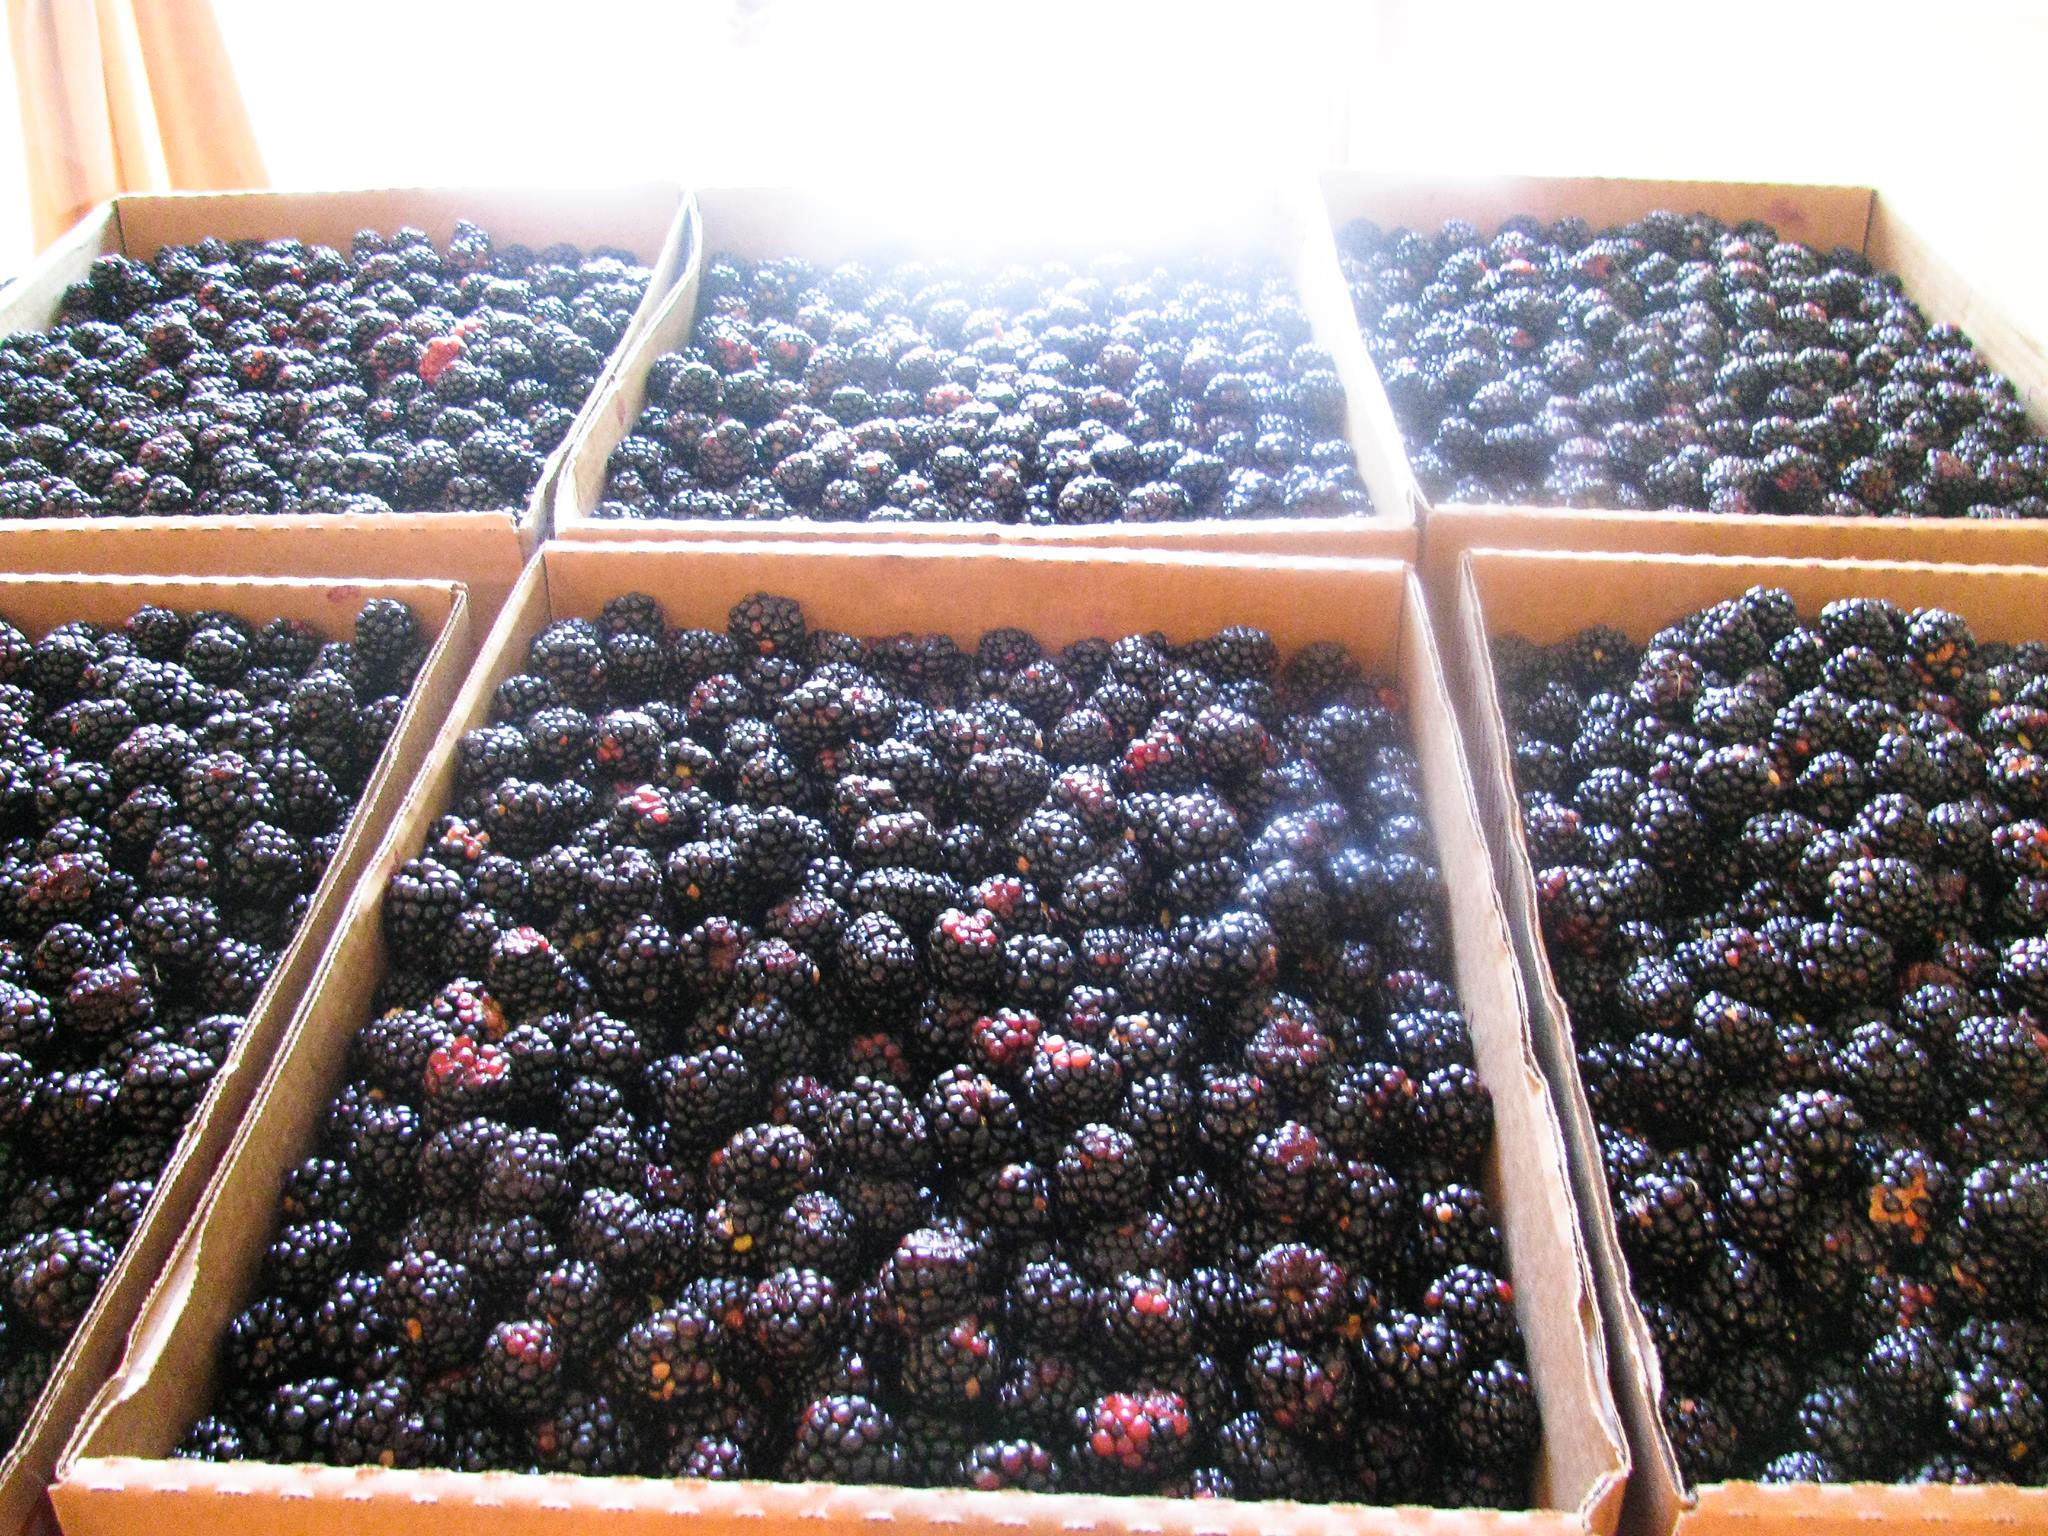 Six flats of blackberries.